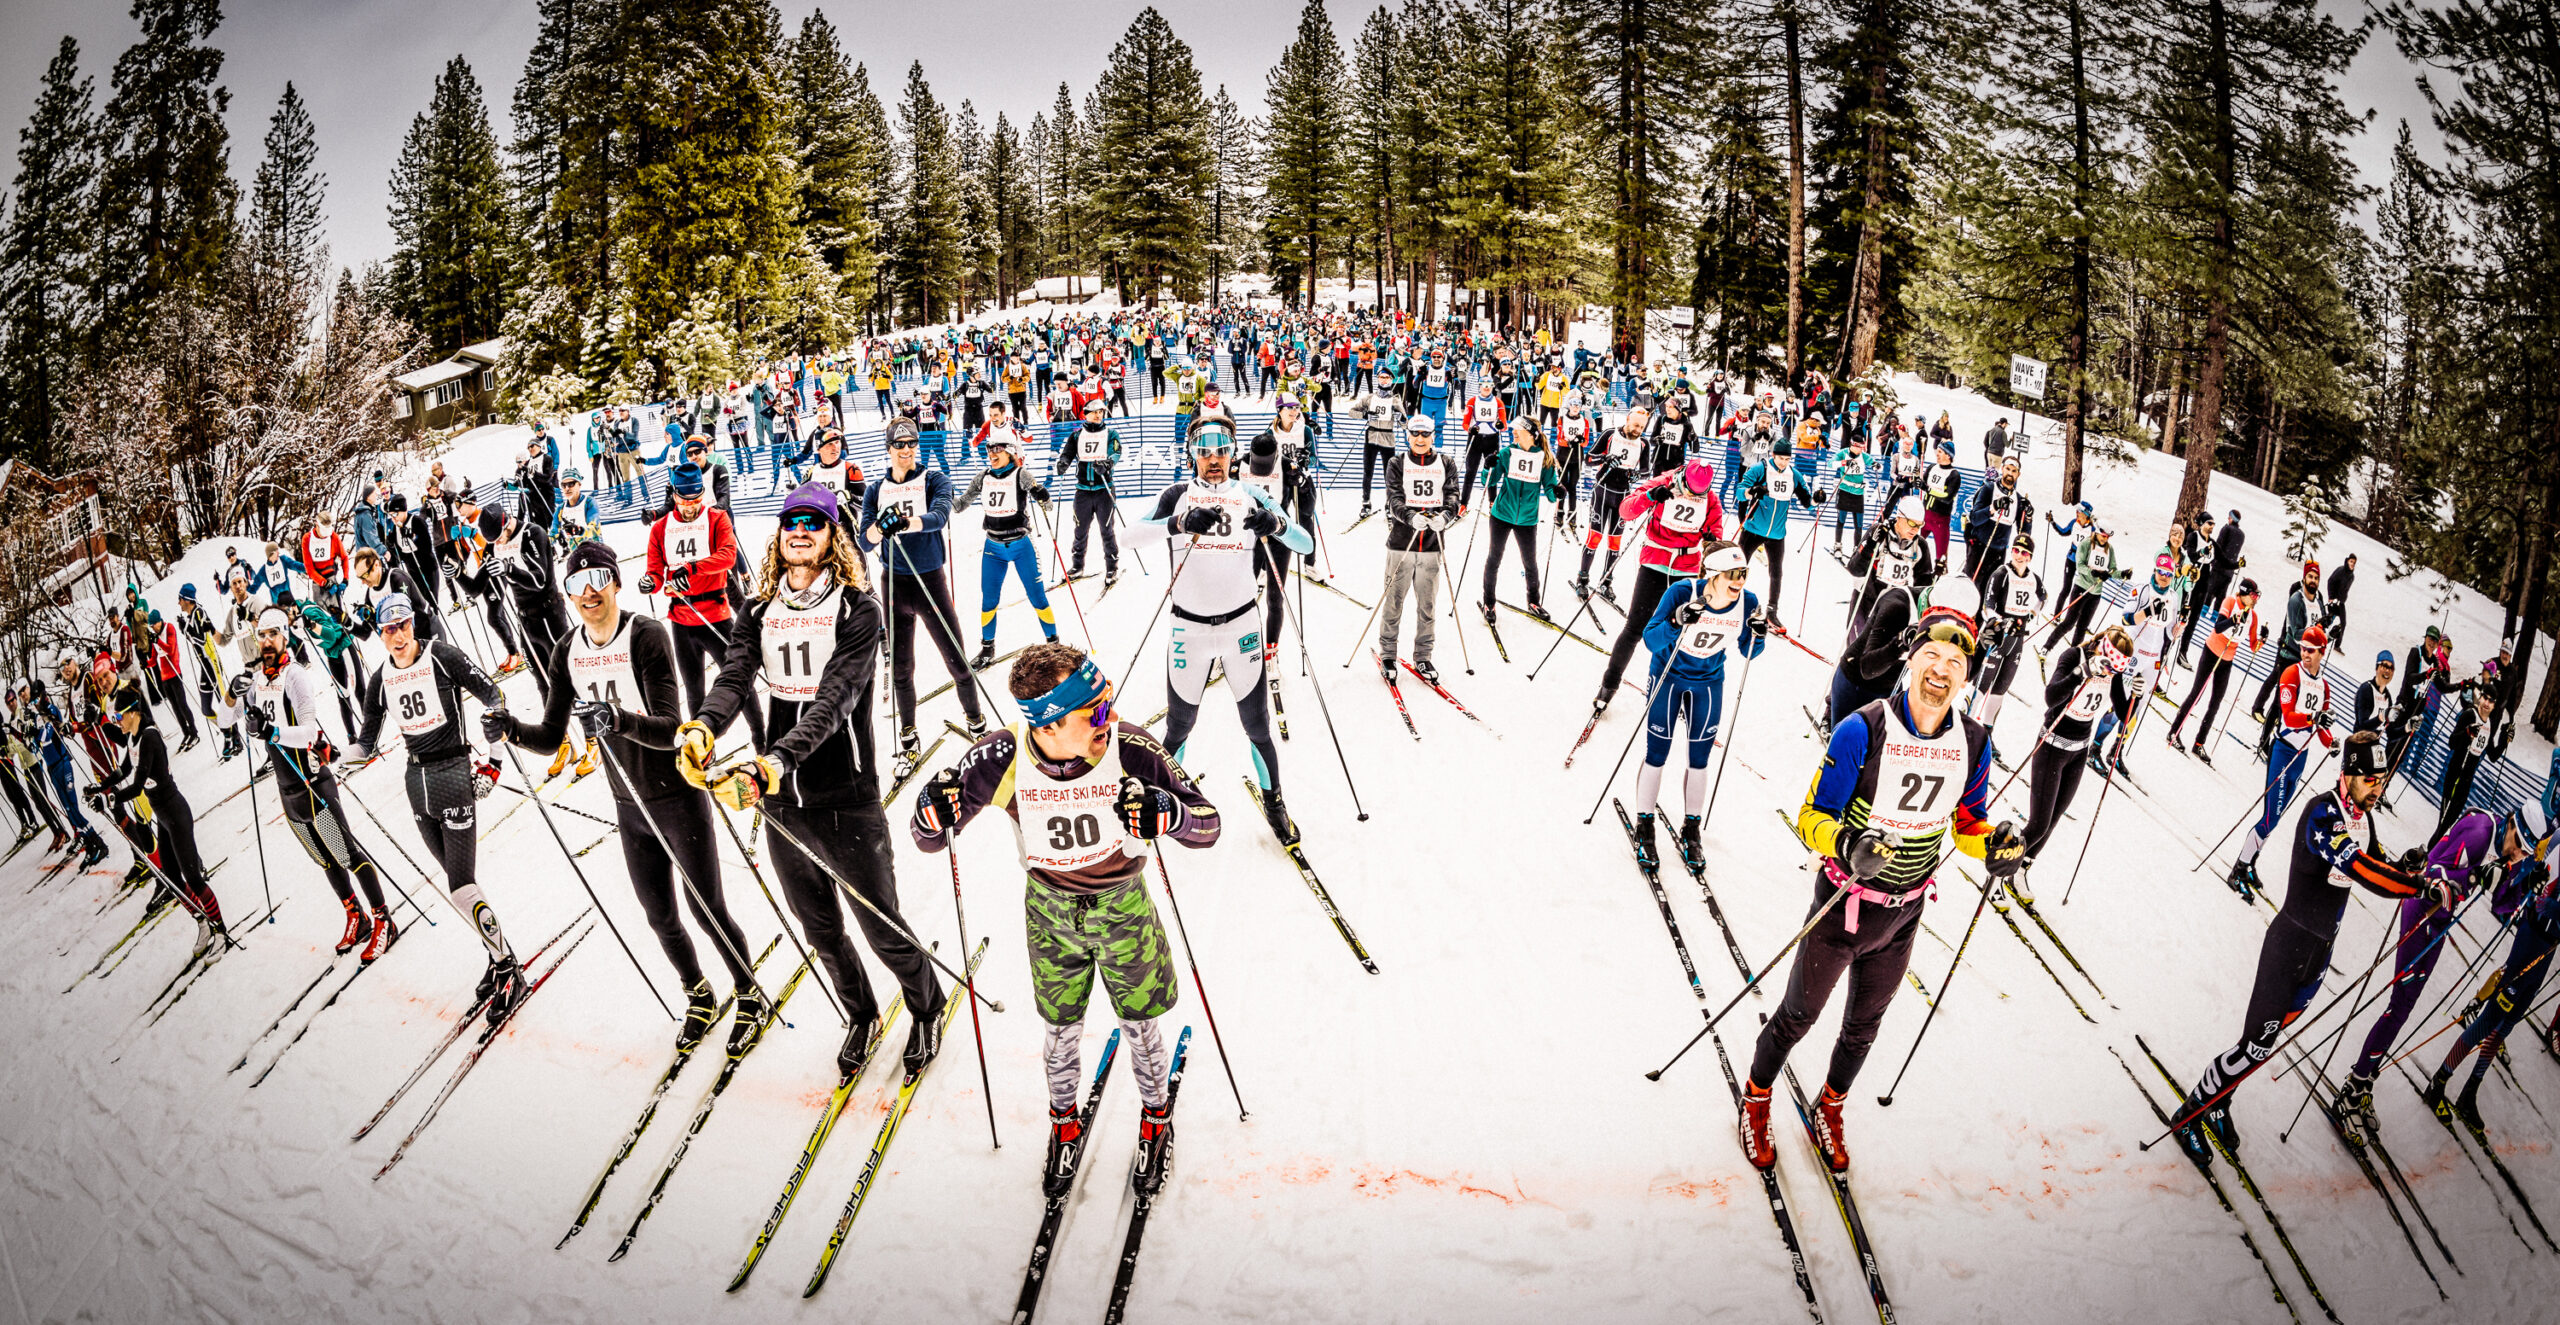 The Great Ski Race Adventure Sports Journal